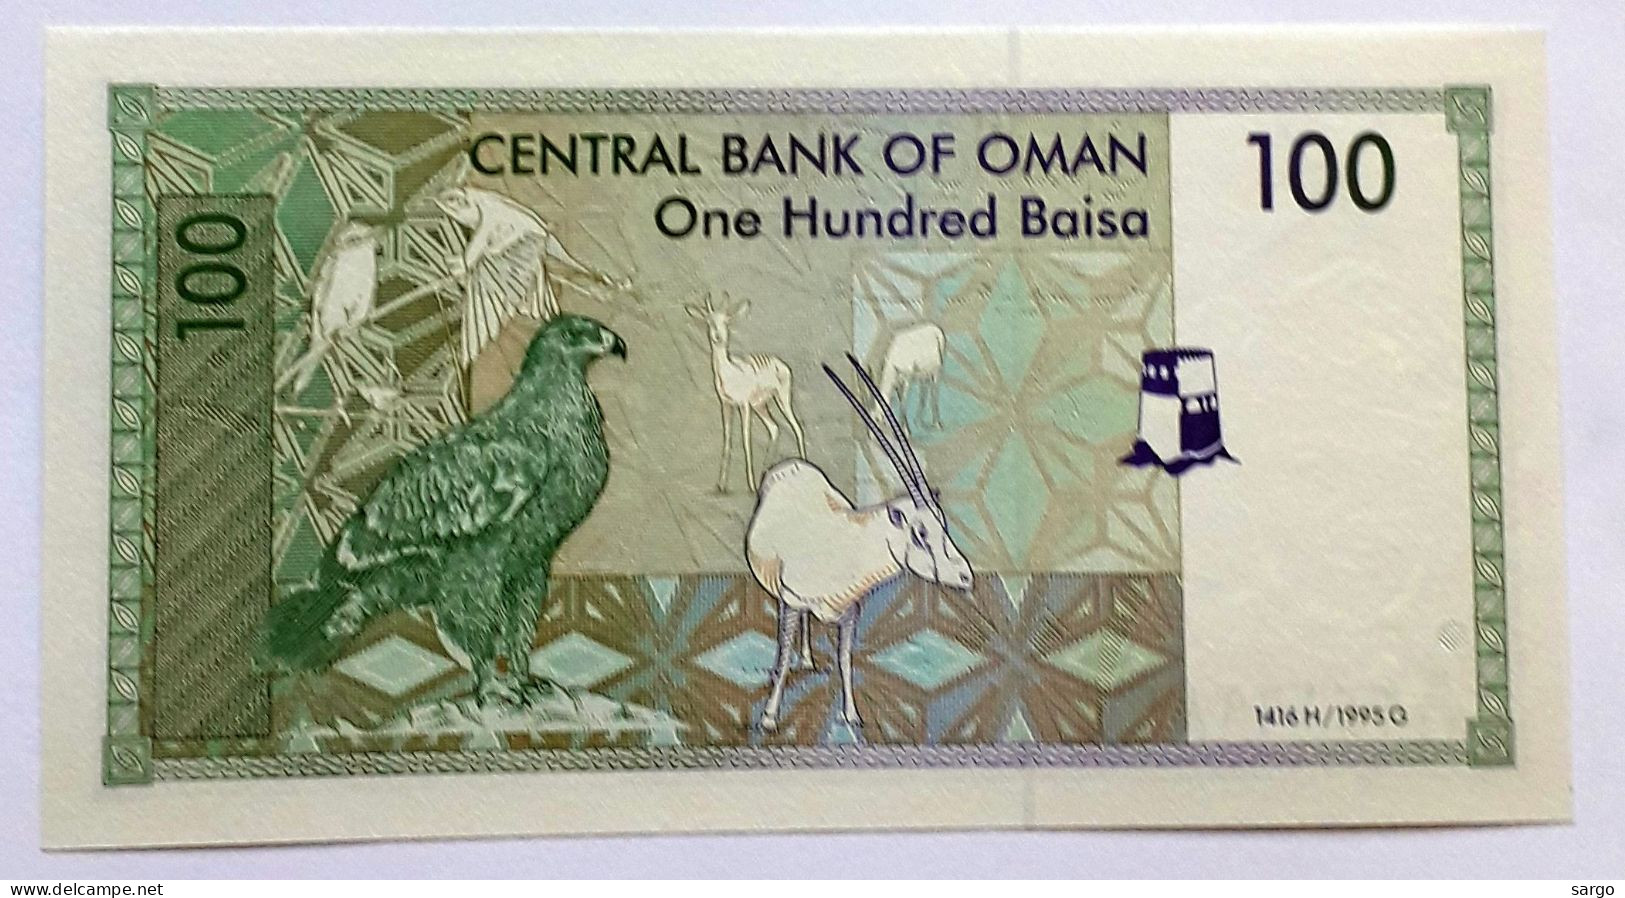 OMAN - 100 BAISA - P 31 (1995)  - UNC -  BANKNOTES - PAPER MONEY - CARTAMONETA - - Oman